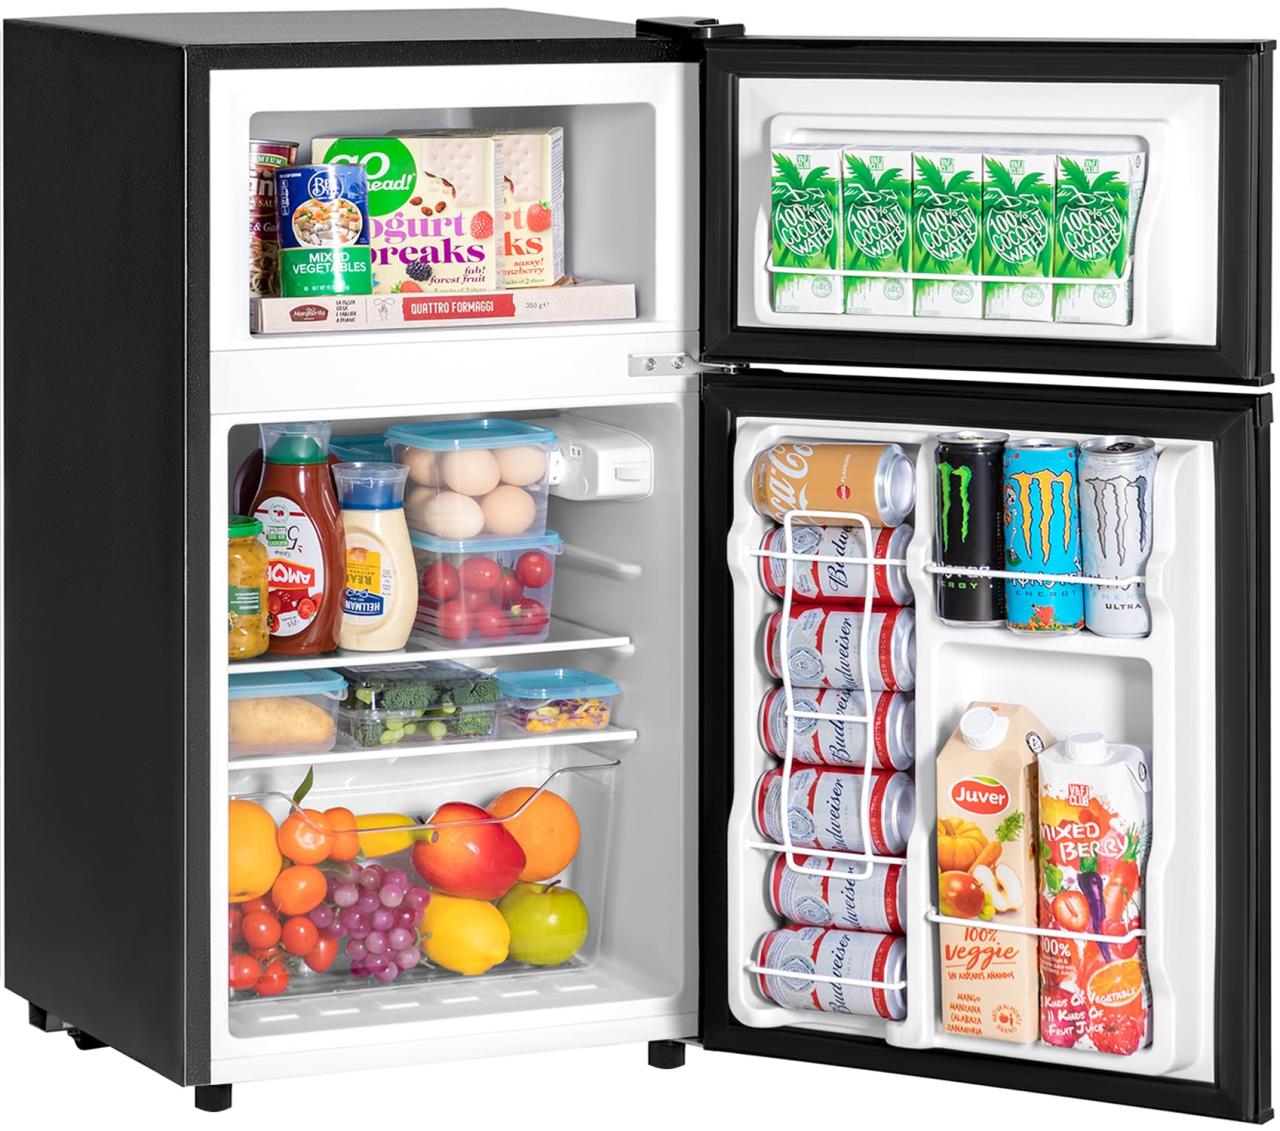 Tehanld mini fridge product image